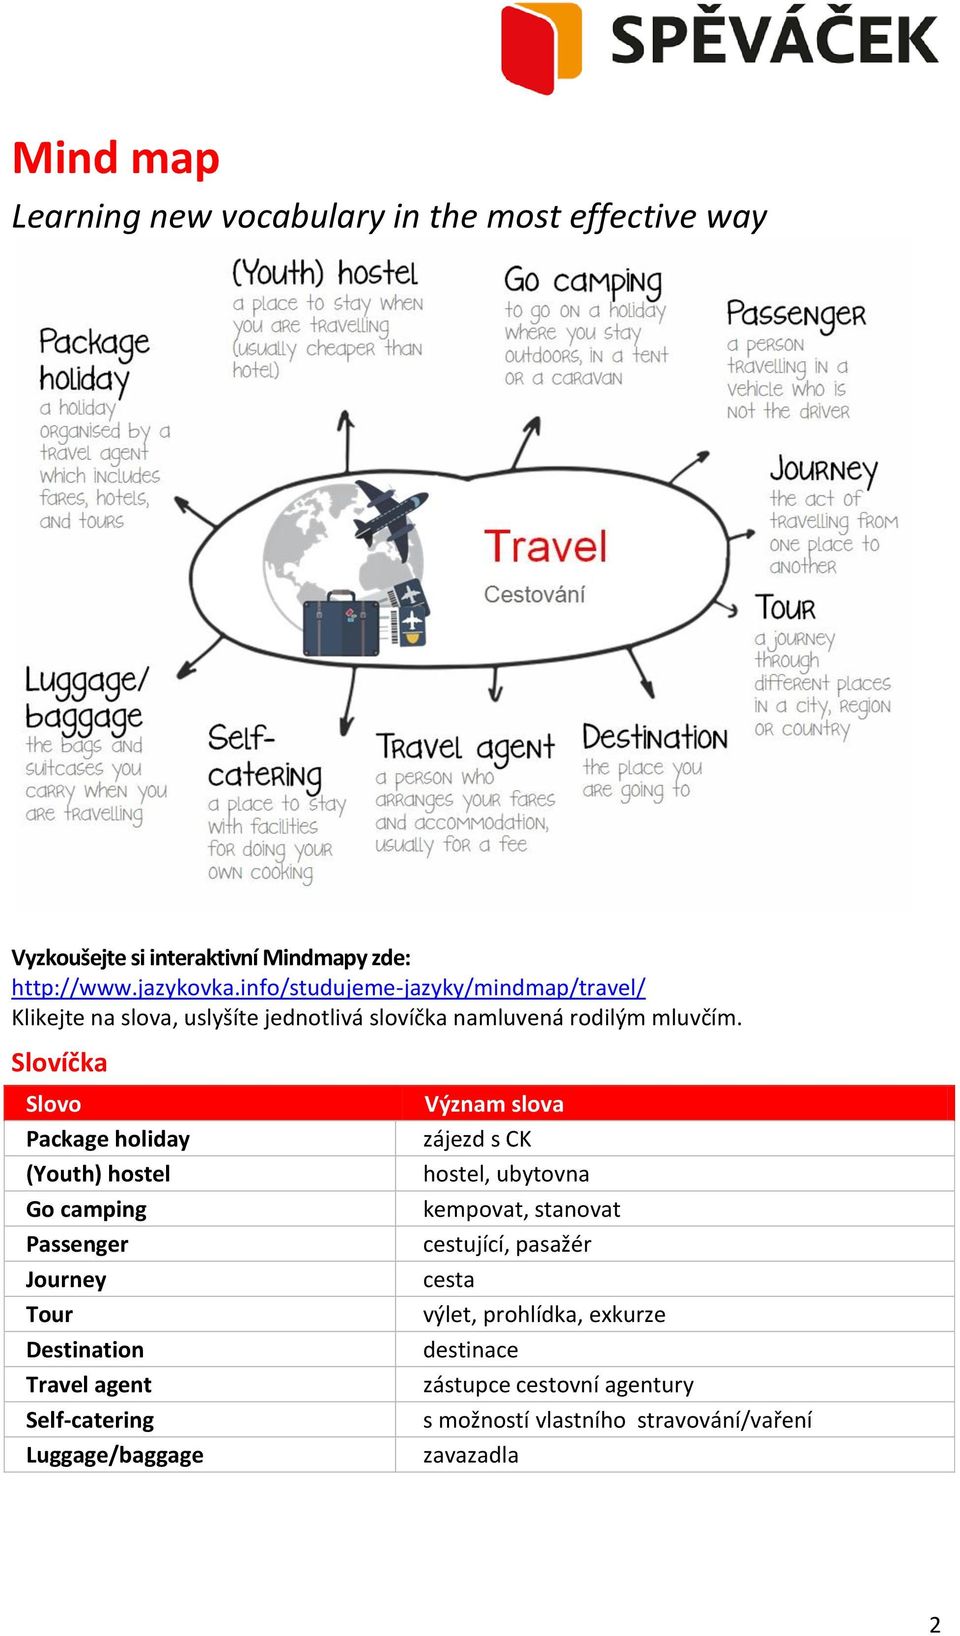 Slovíčka Slovo Package holiday (Youth) hostel Go camping Passenger Journey Tour Destination Travel agent Self-catering Luggage/baggage Význam